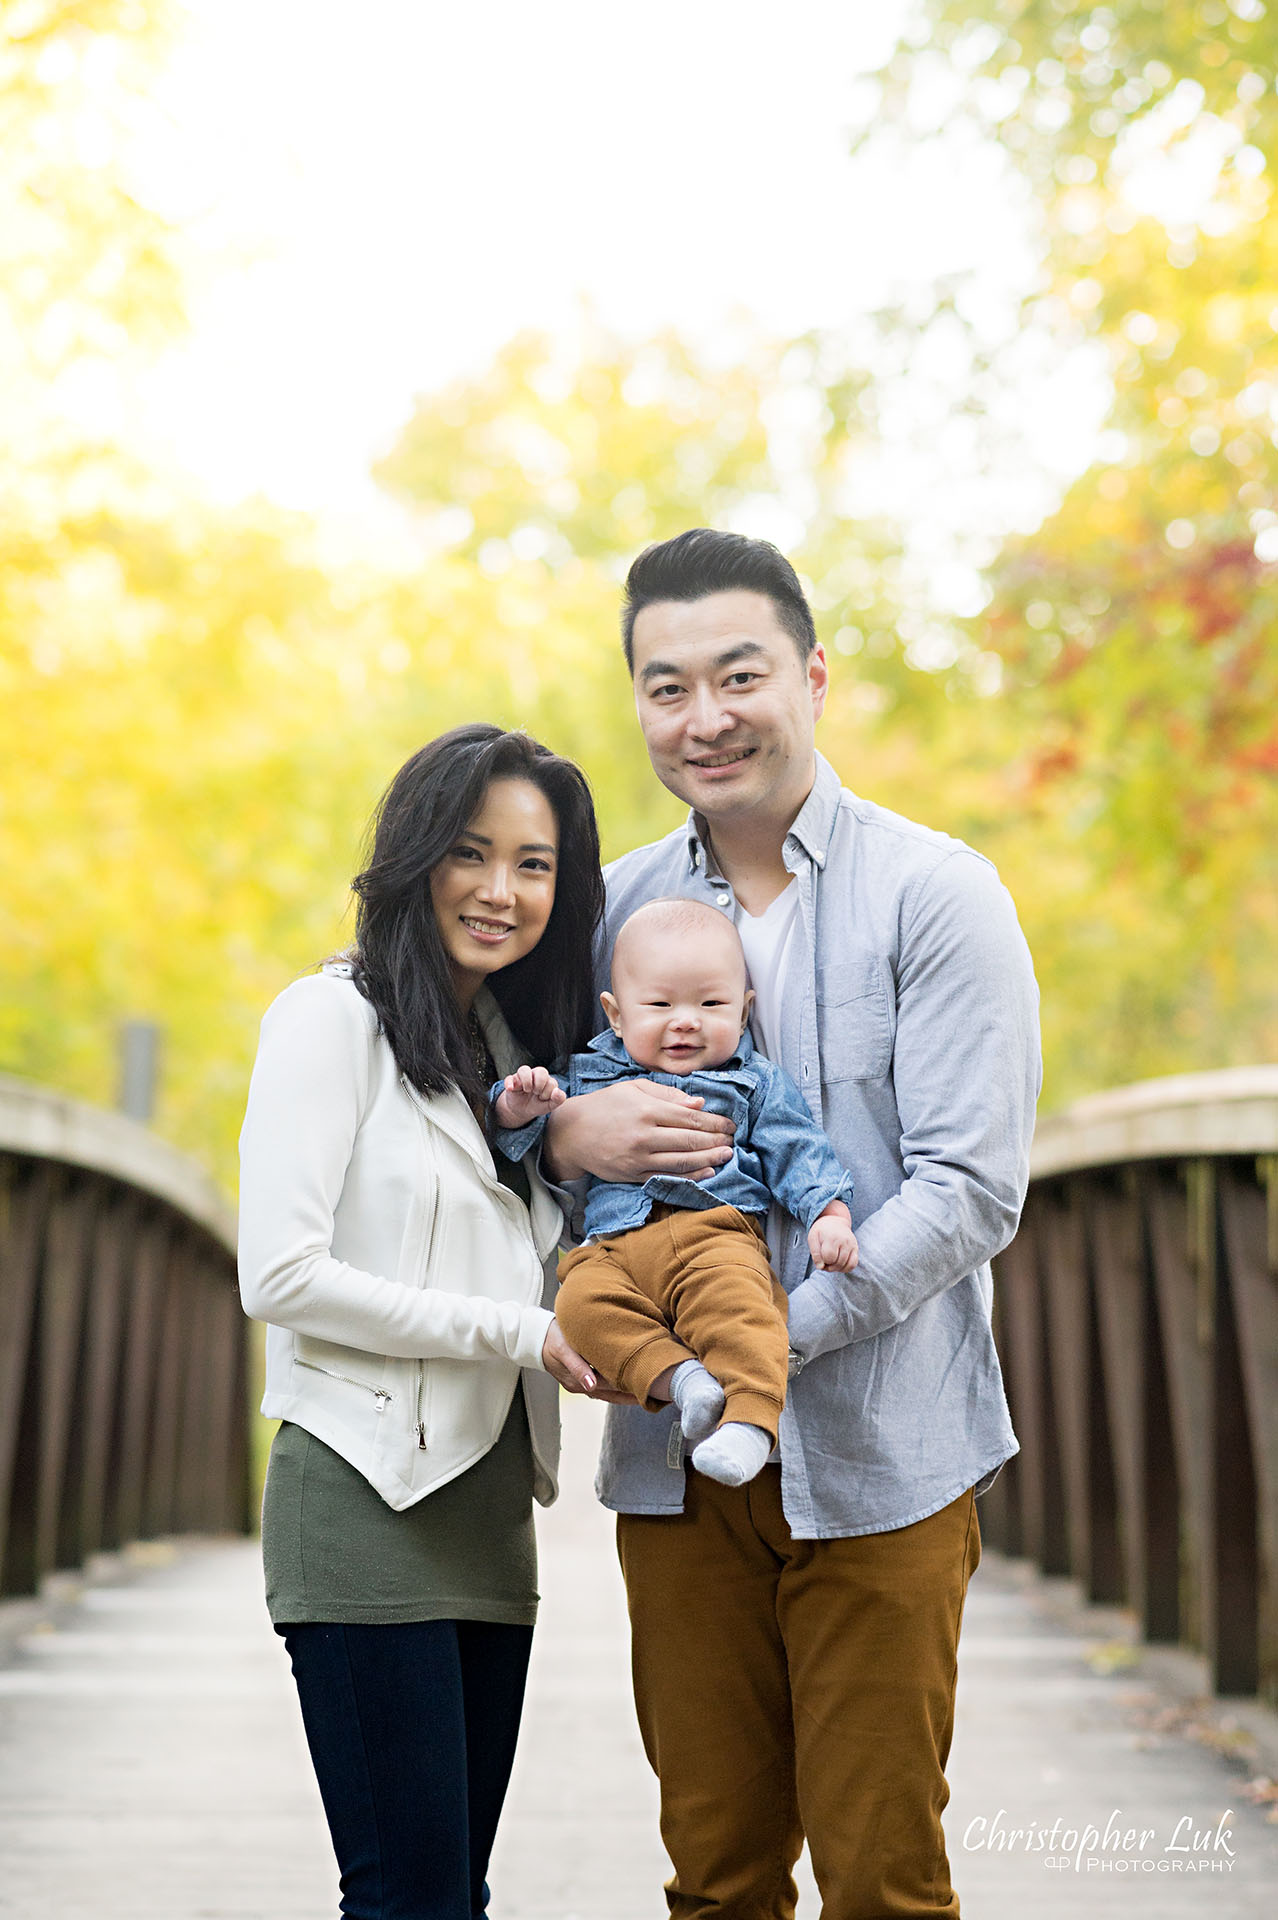 Mother Father Son Baby Smiling Portrait on Bridge Autumn Fall Leaves Markham Unionville Toronto Family Photographer